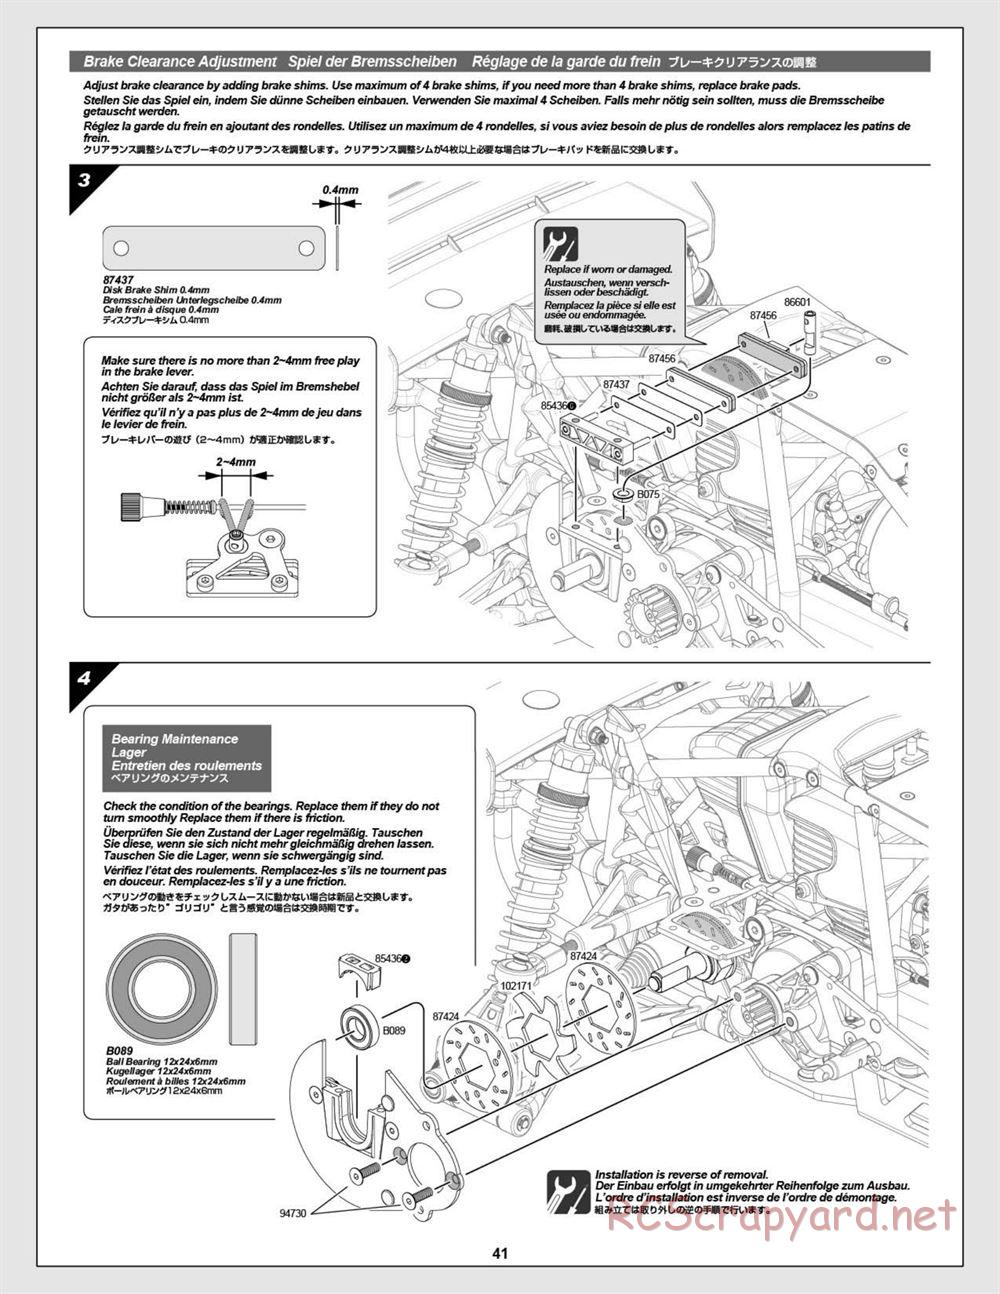 HPI - Baja 5B 2.0 RTR - Manual - Page 41